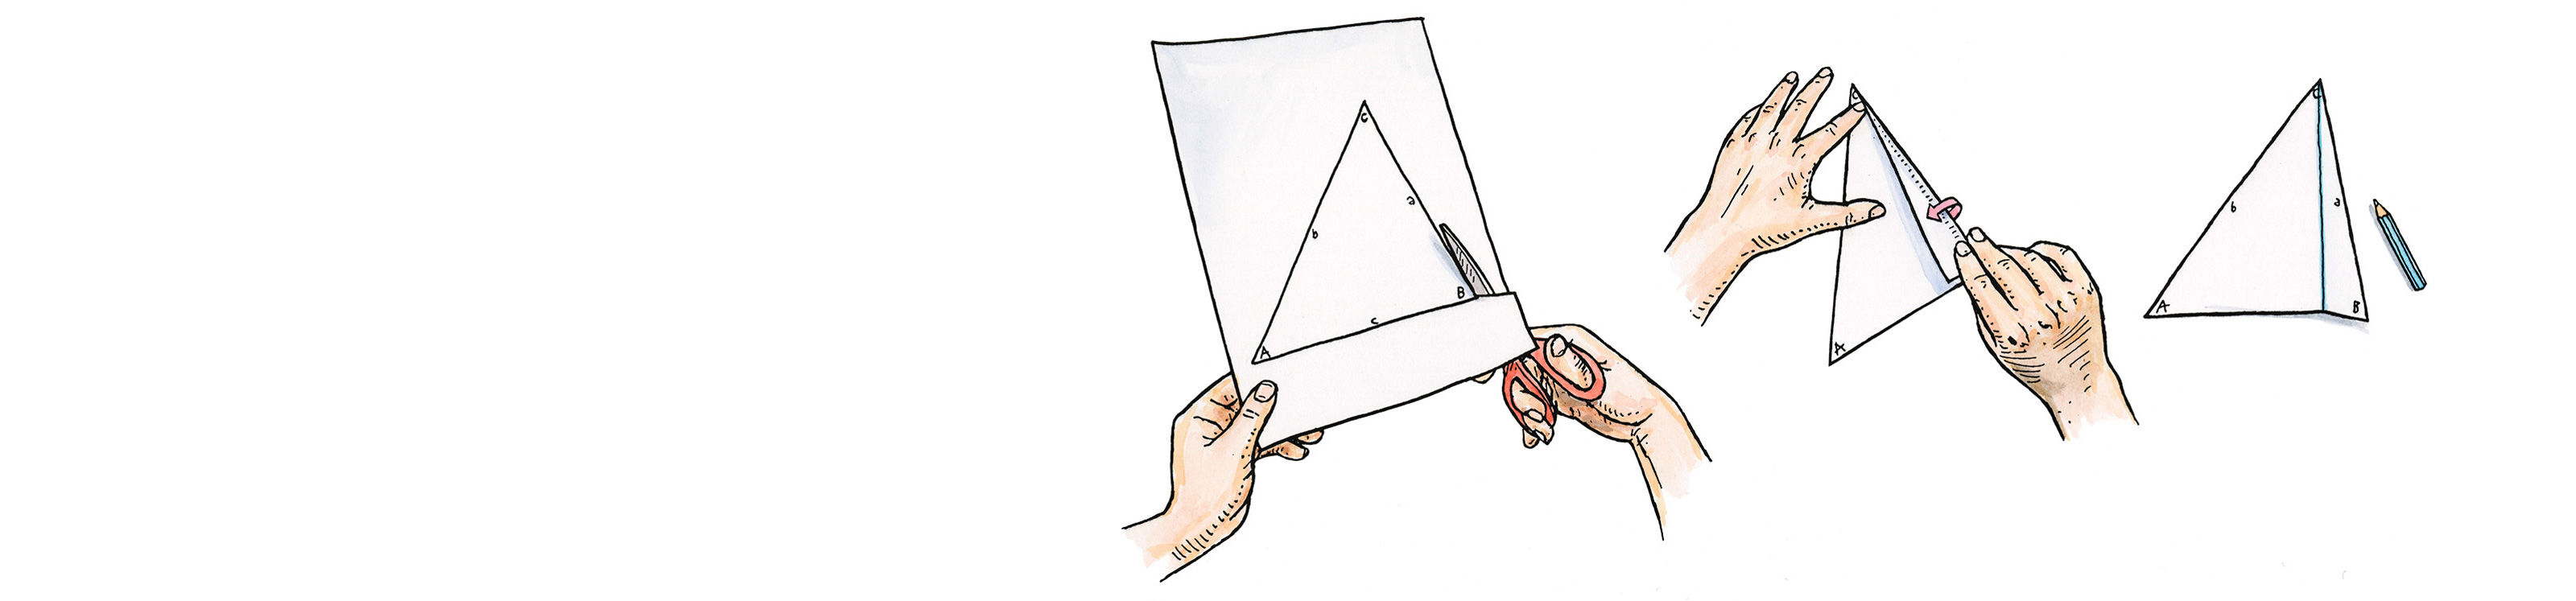 oculus-illustration-lehrmittel_mathematik-haende-schere